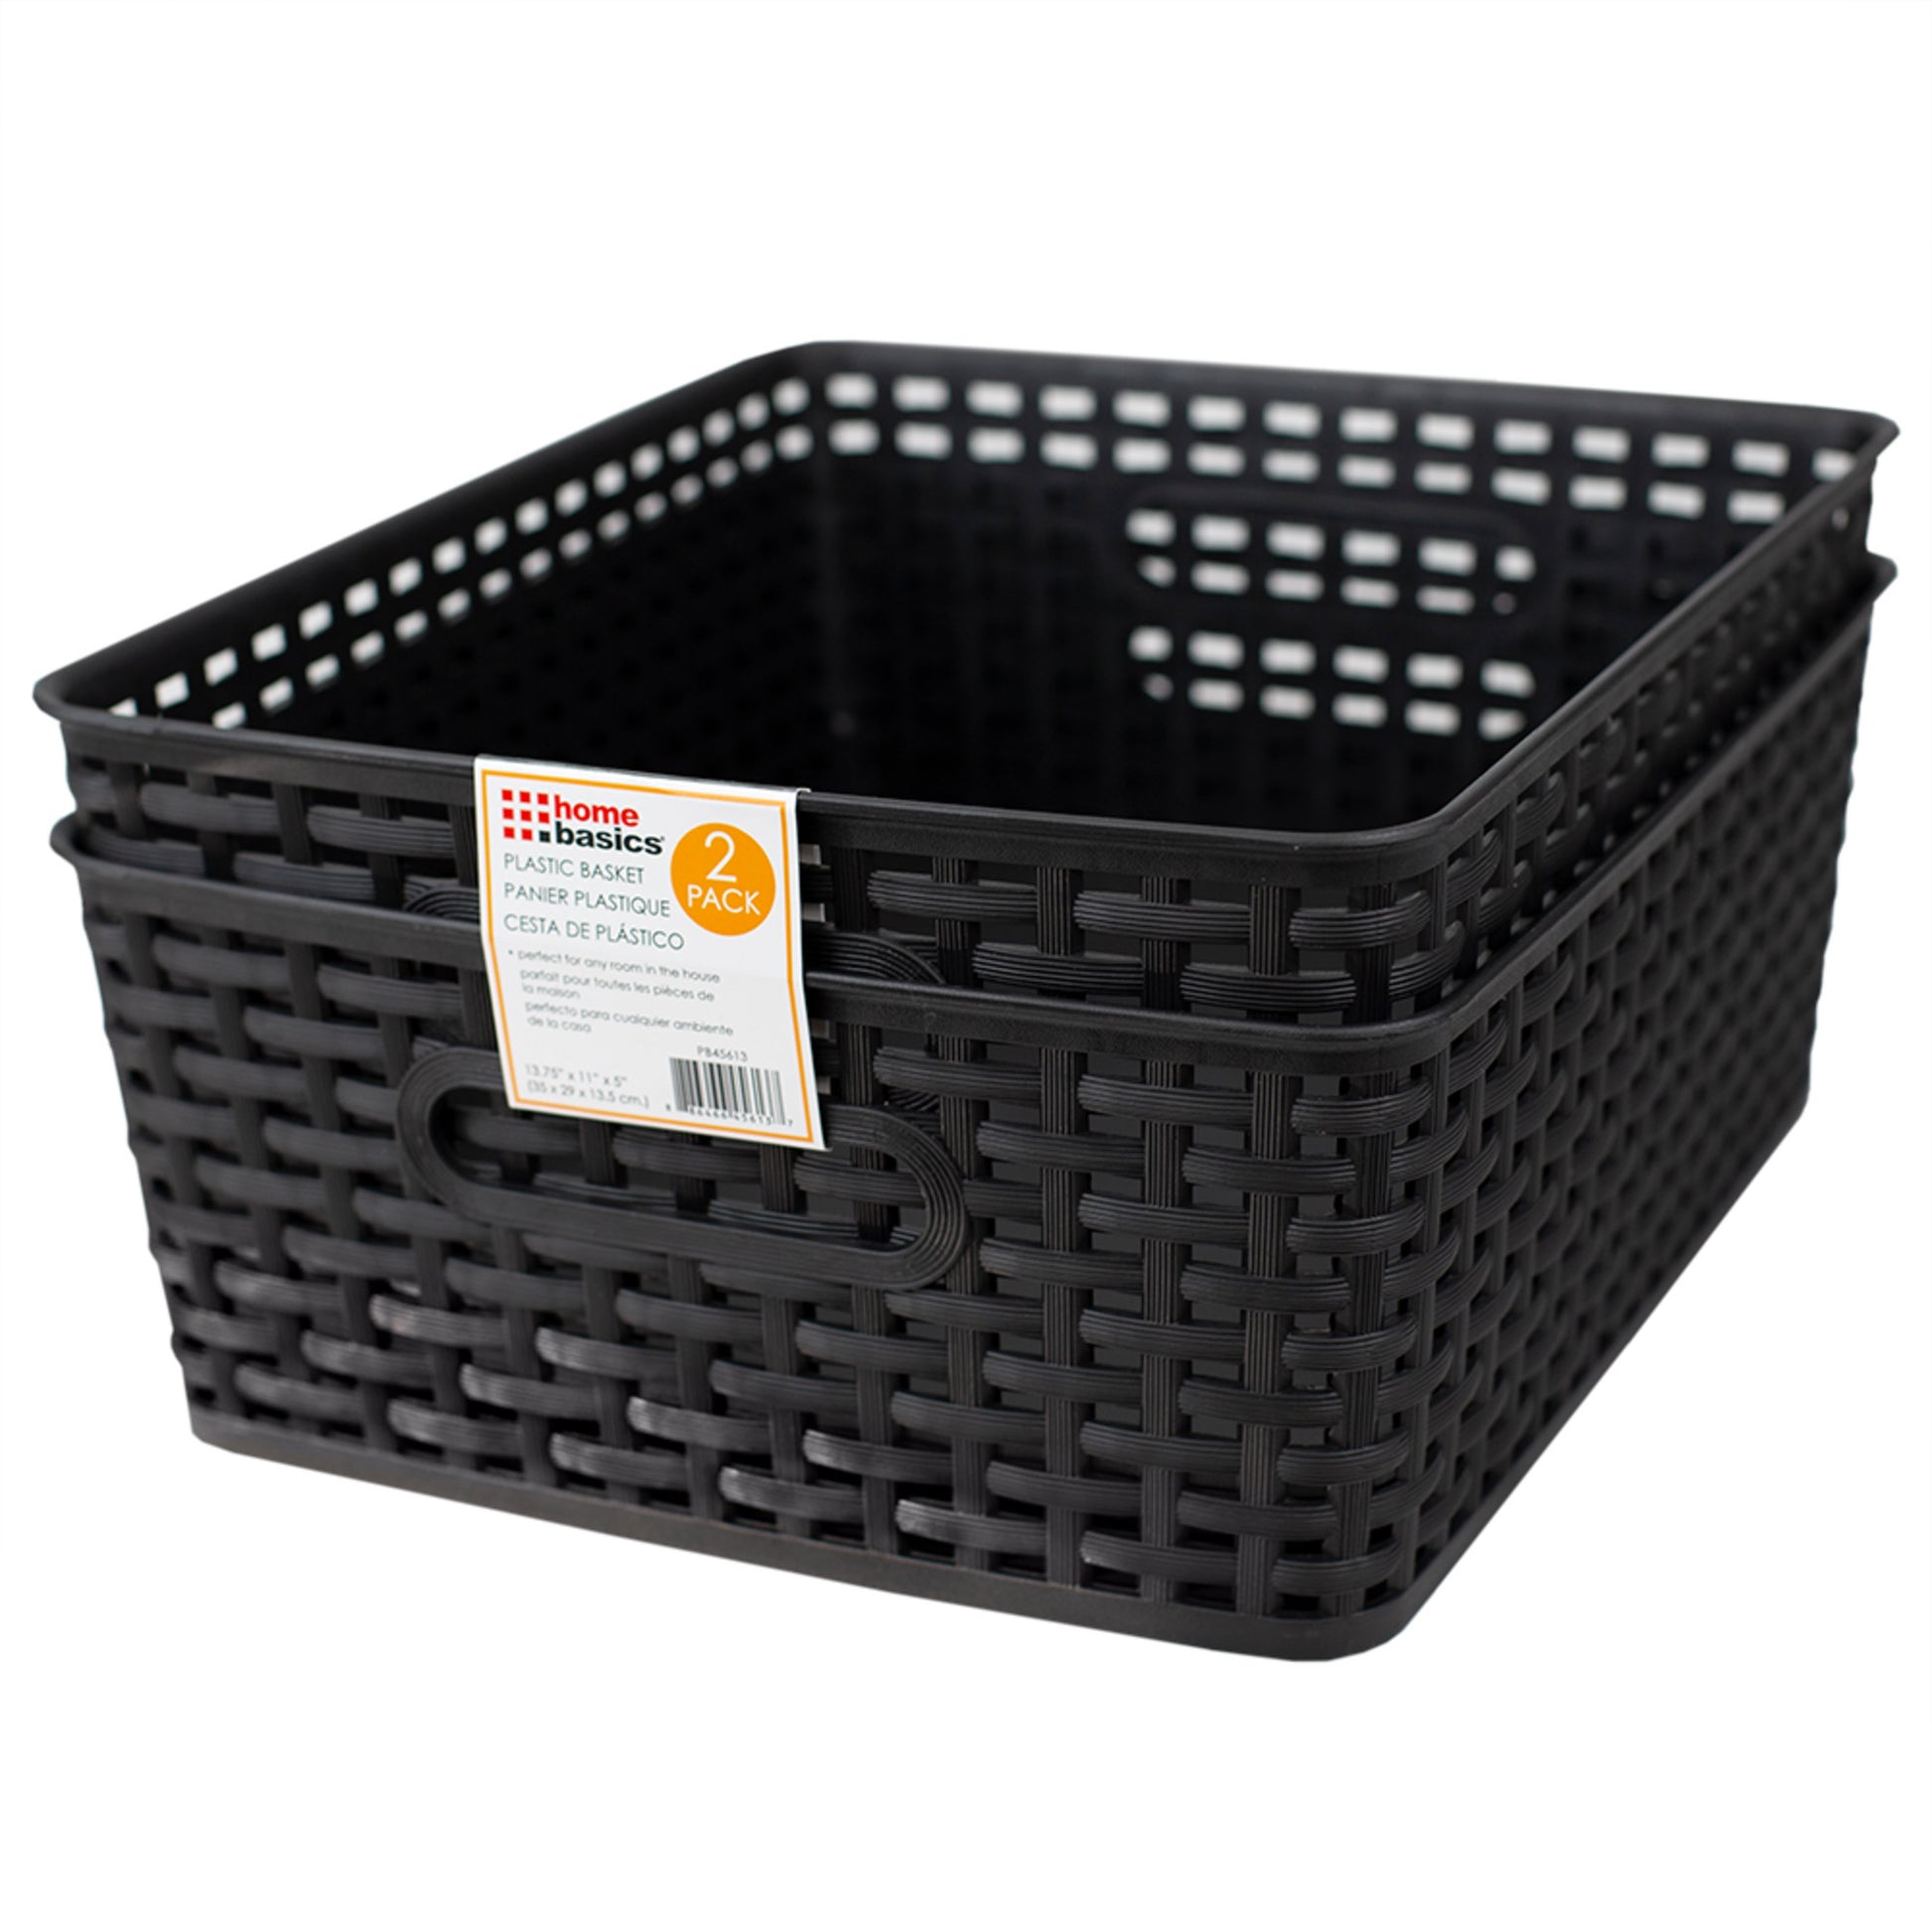 Home Basics Crossweave 14" x 11.75" x 5.25" Multi-Purpose Stackable Plastic Storage Basket, (Pack of 2), Black - Black